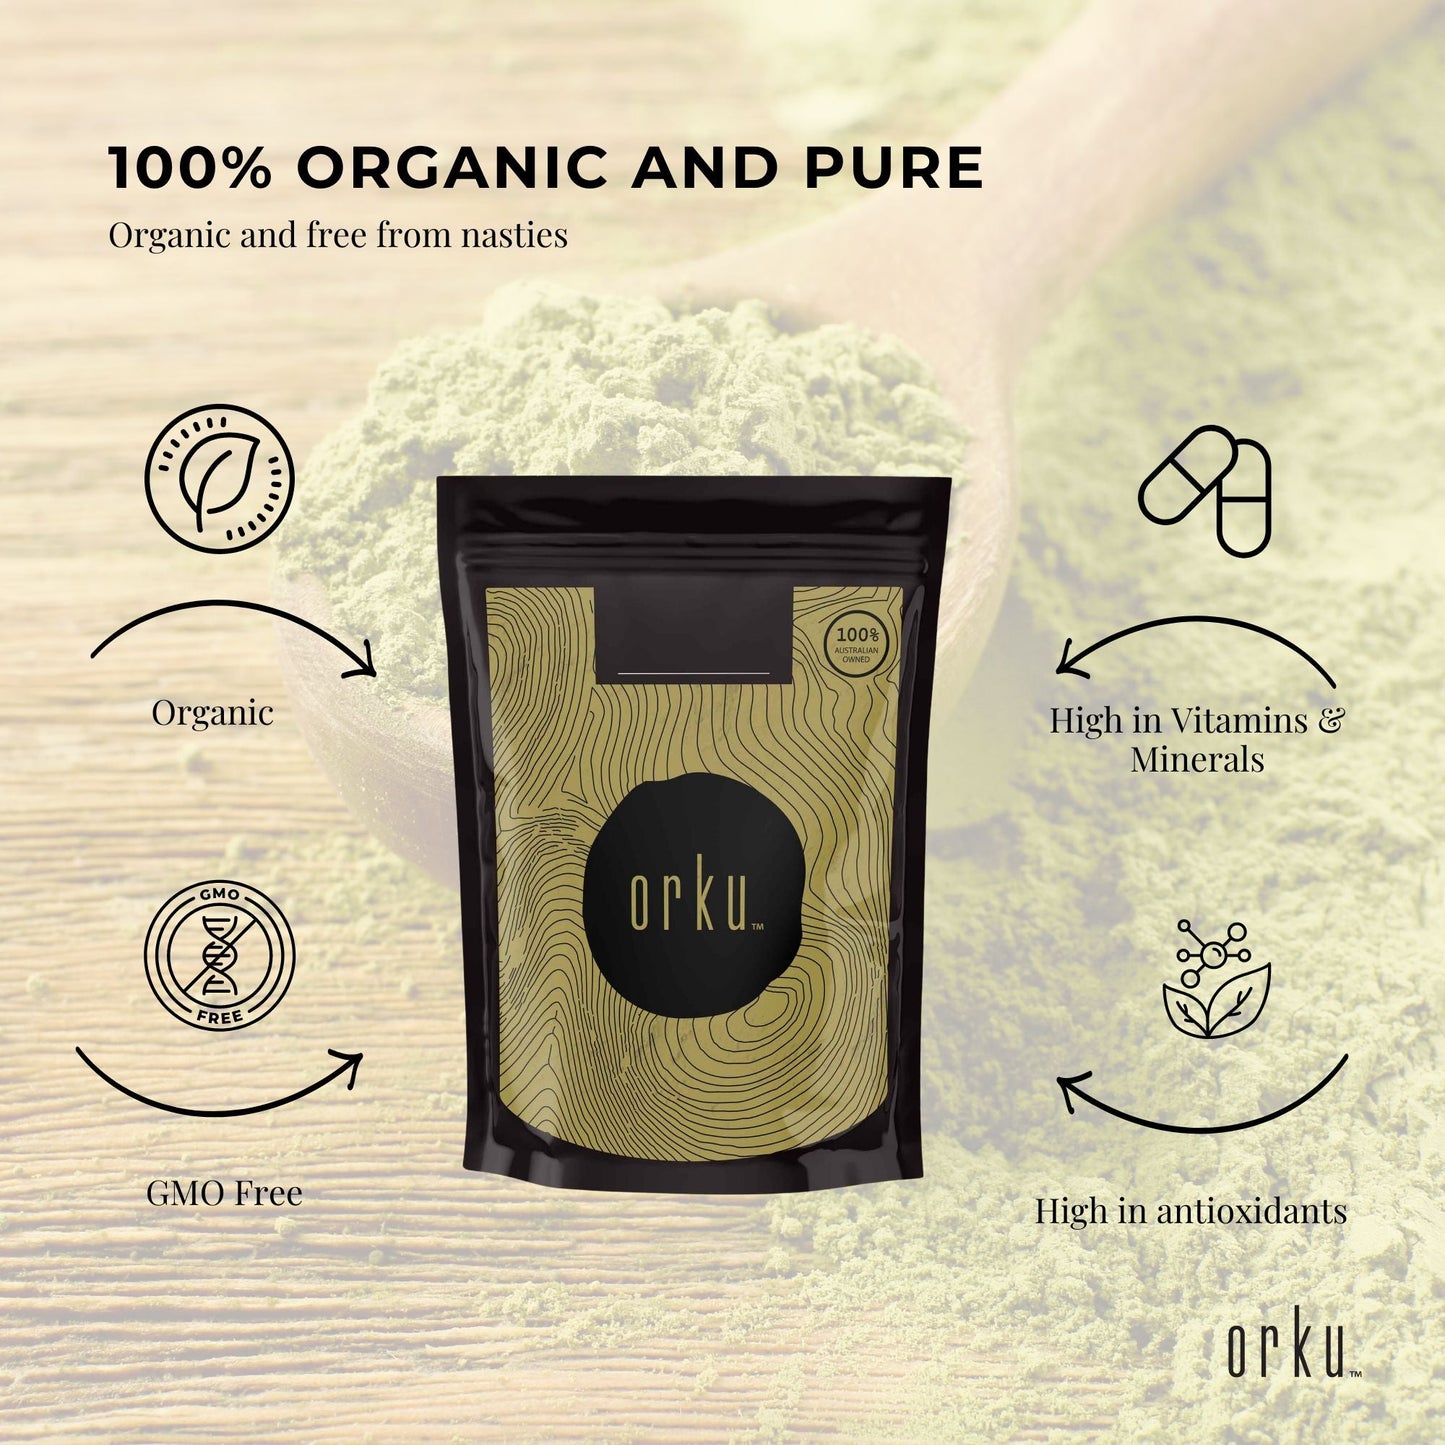 100g Organic Matcha Green Tea Powder Camellia Sinensis Leaf Supplement